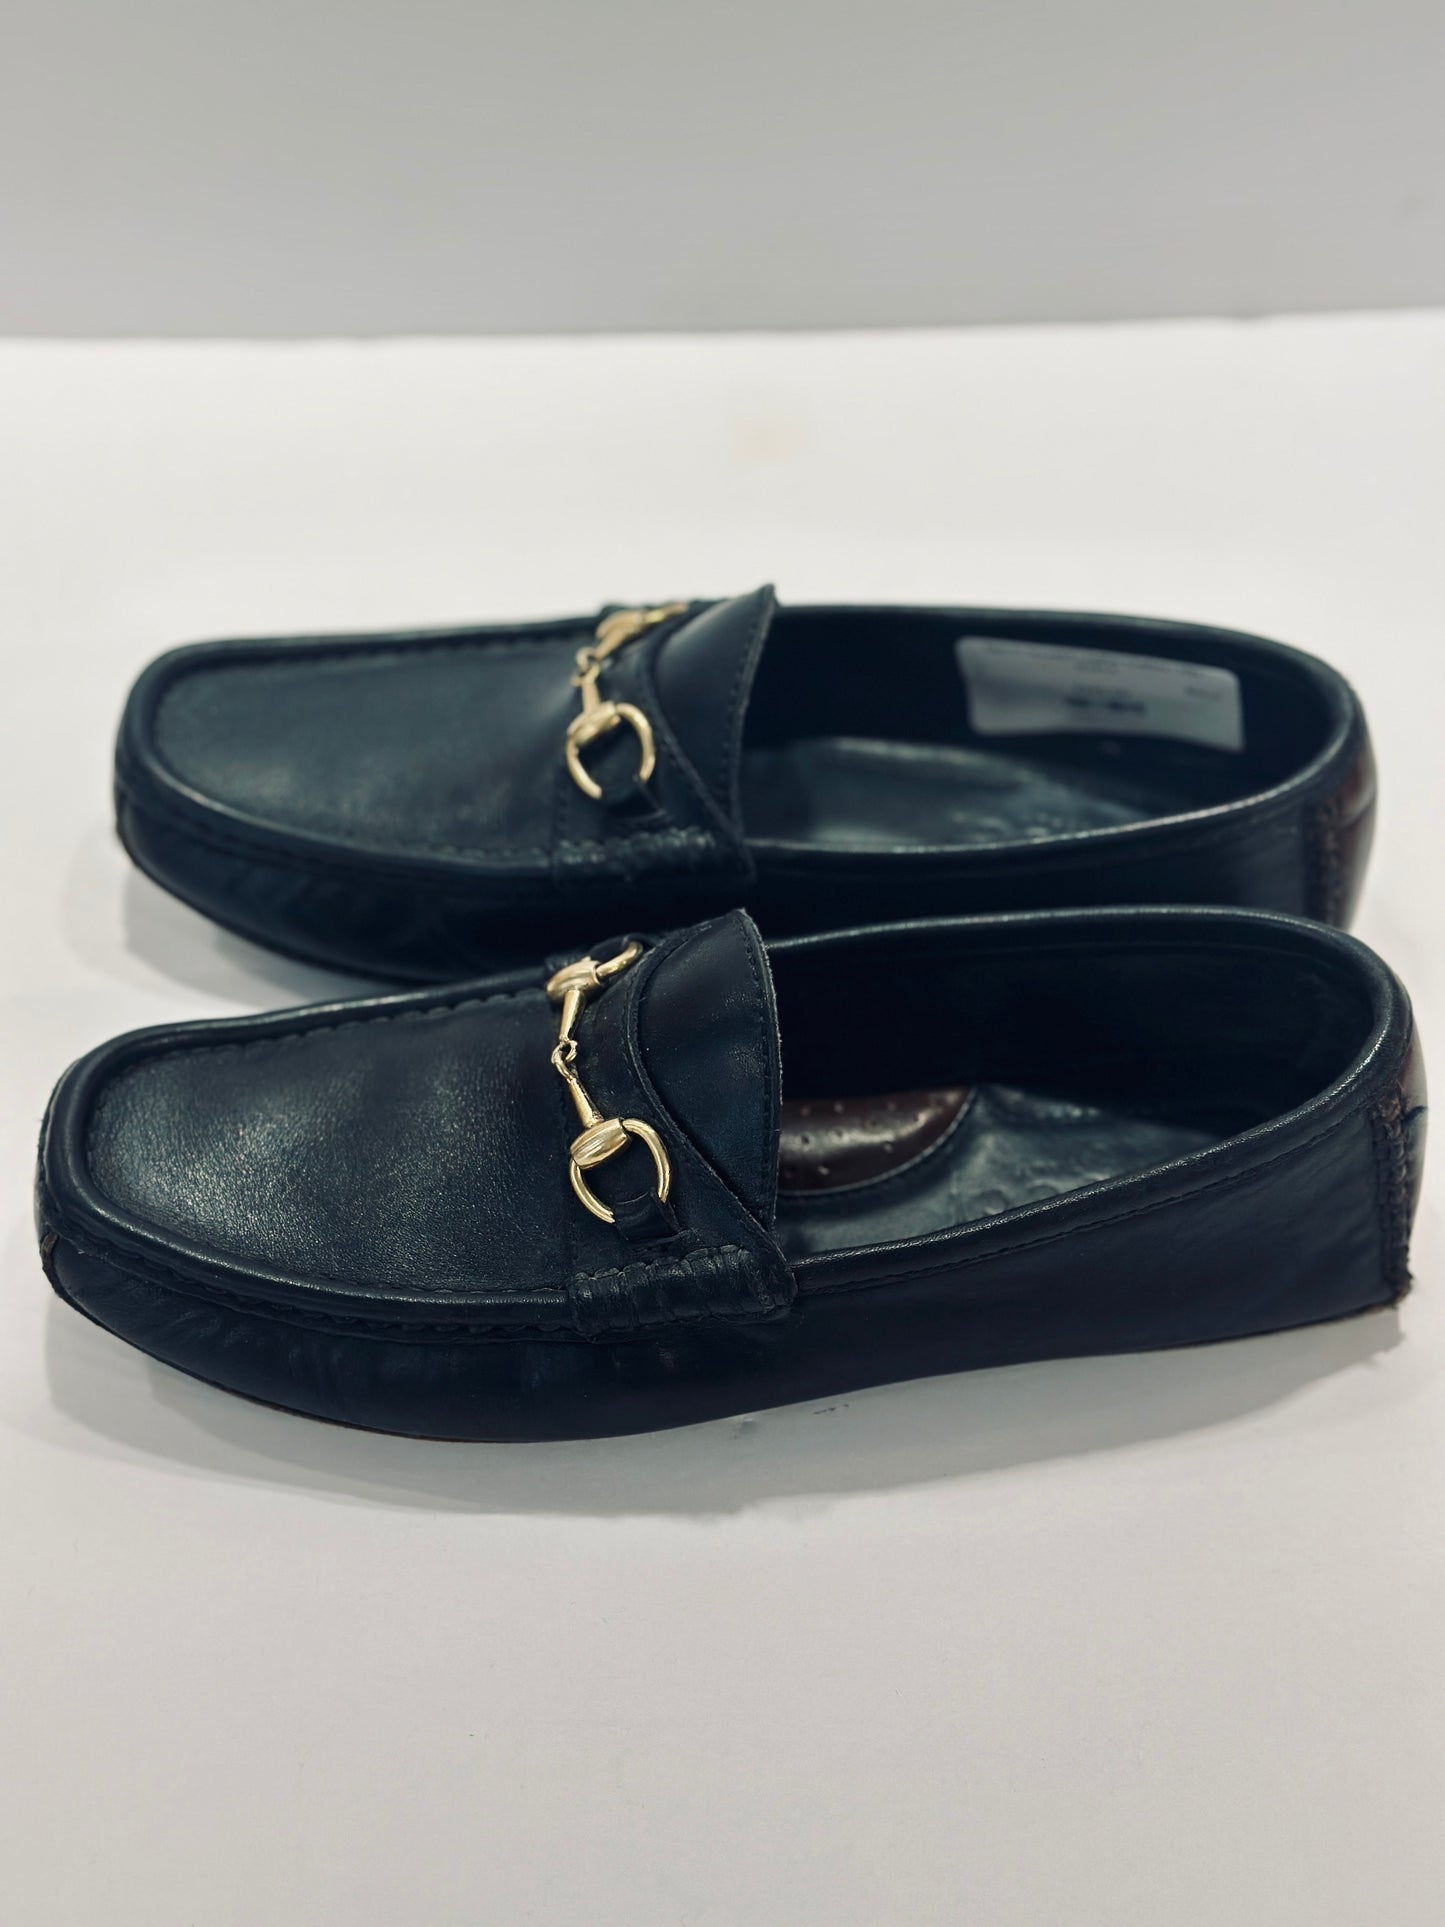 GUCCI Horsebit Leather Loafers / US7-EU37.5